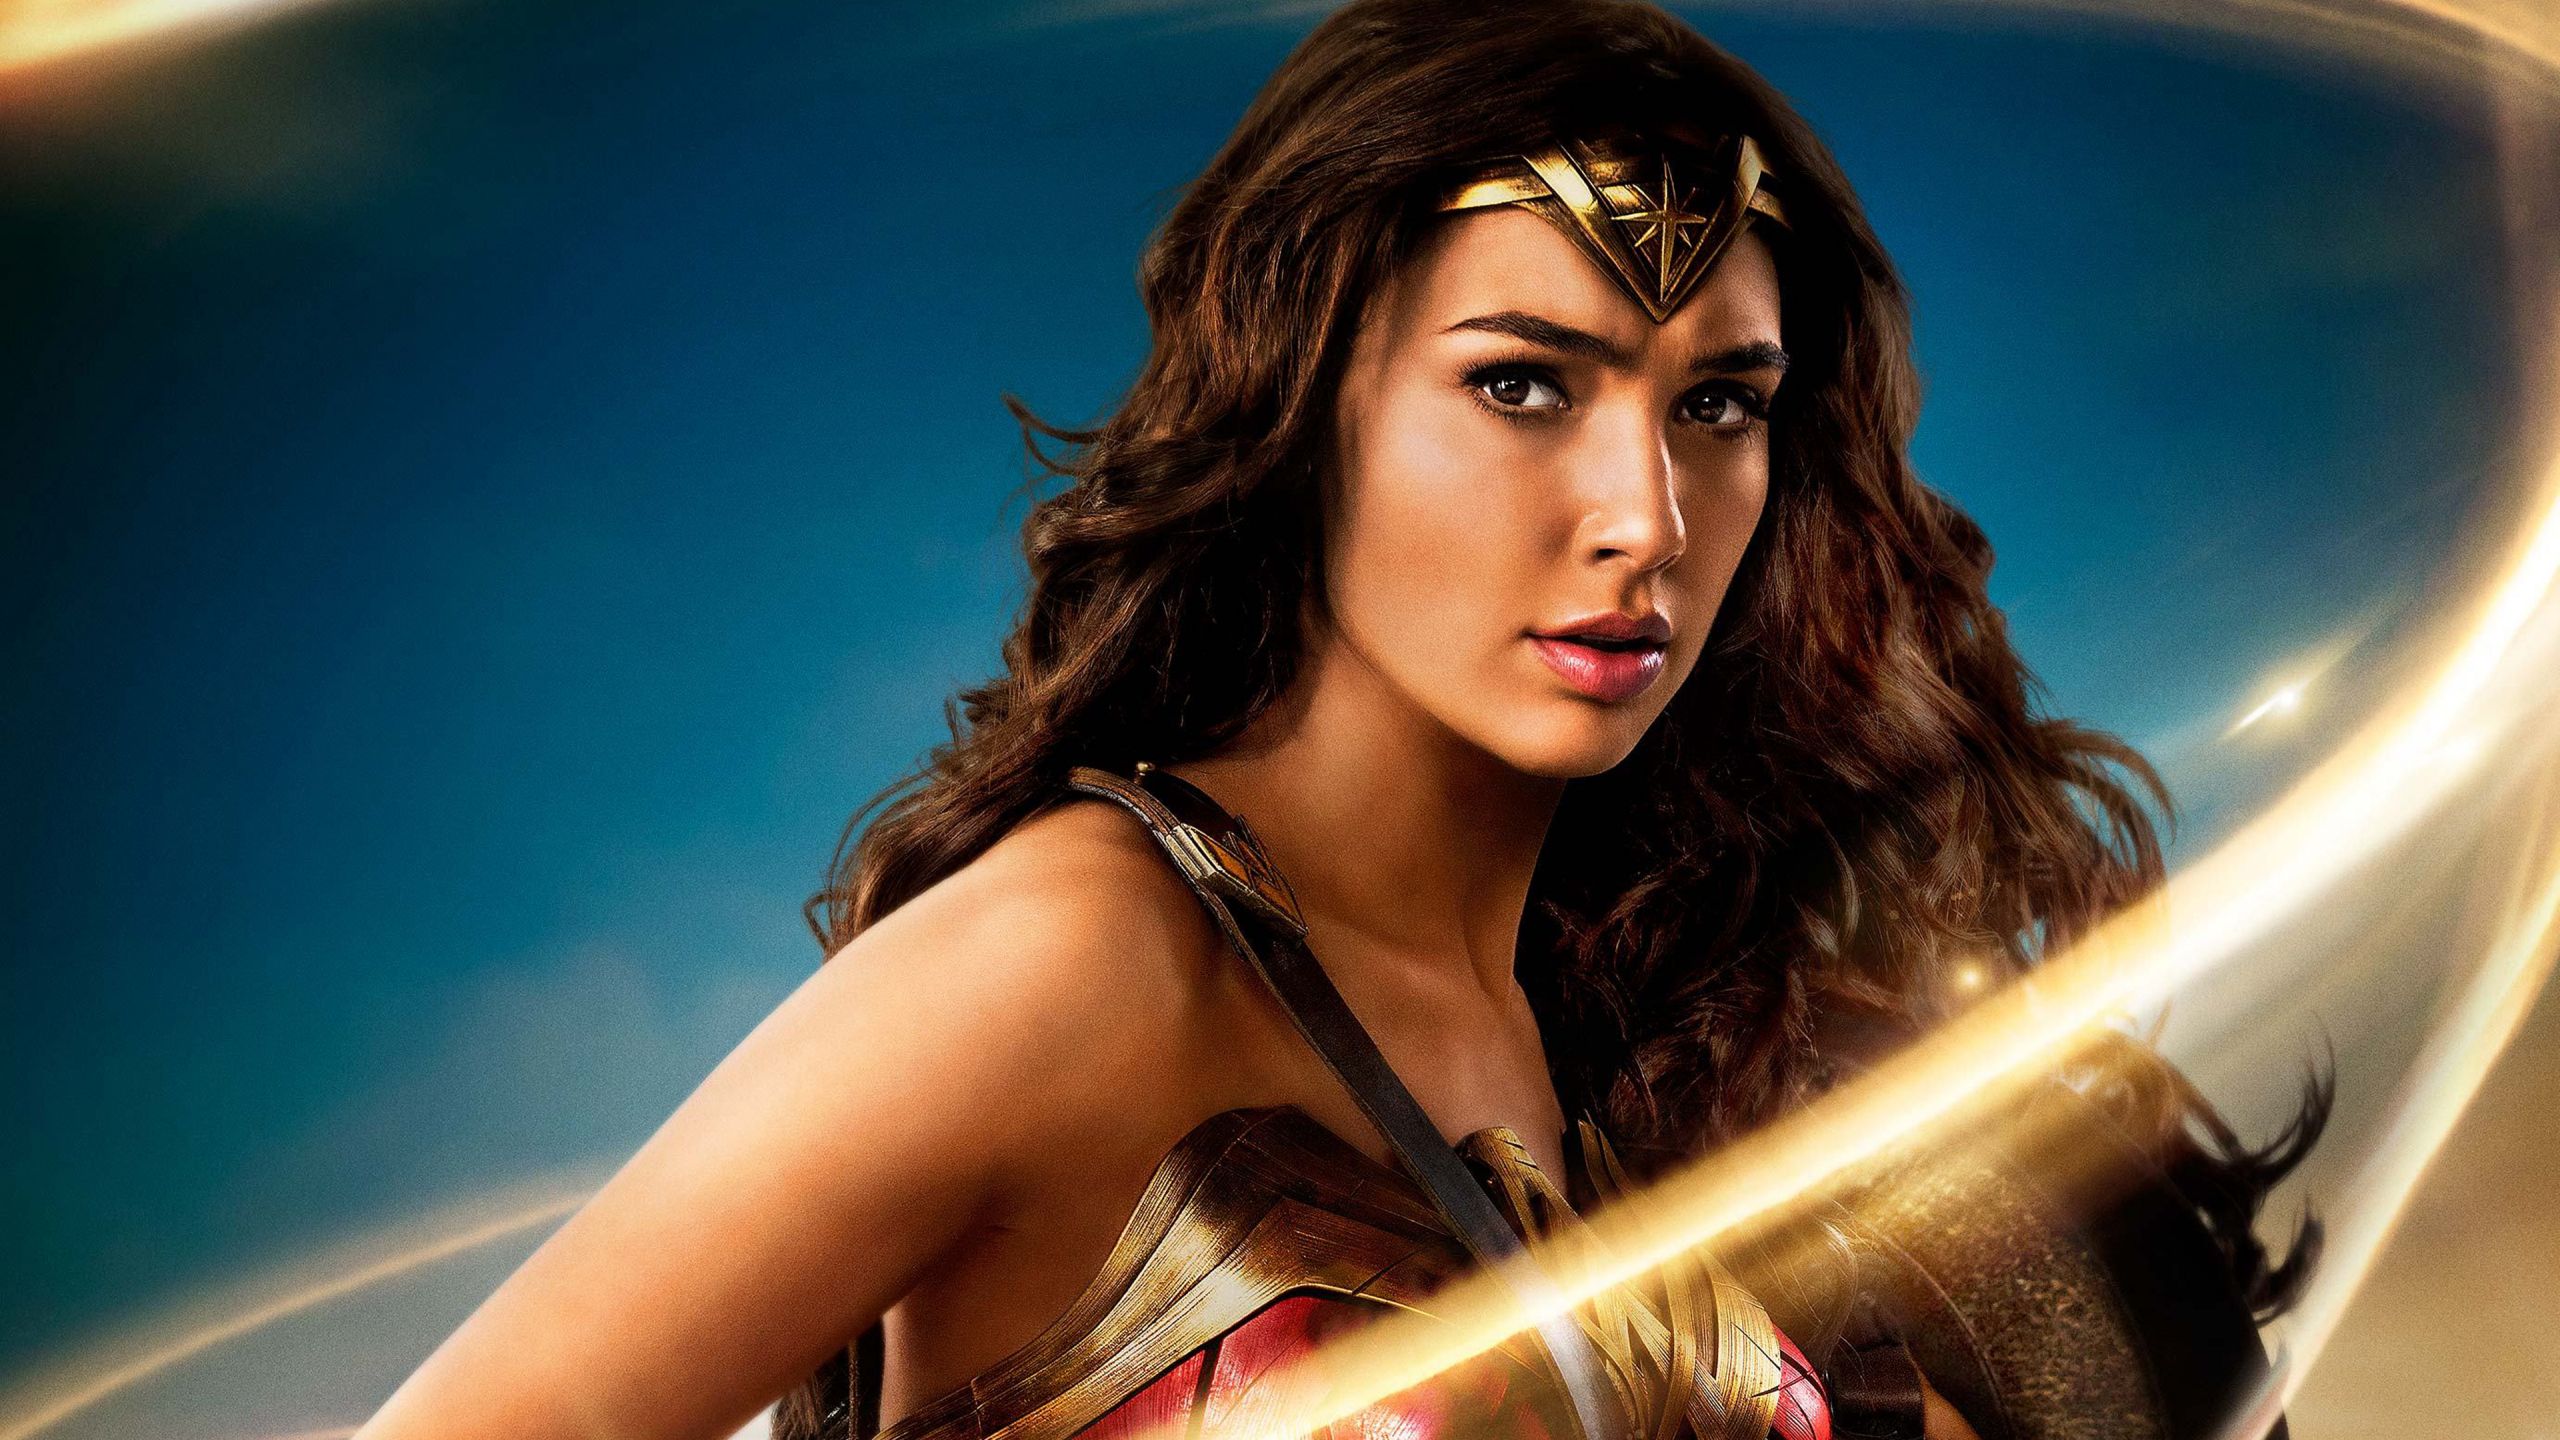 Desktop Wallpaper Gal Gadot, Wonder Woman, Movie, New Poster, 4k, HD Image, Picture, Background, Szjepk